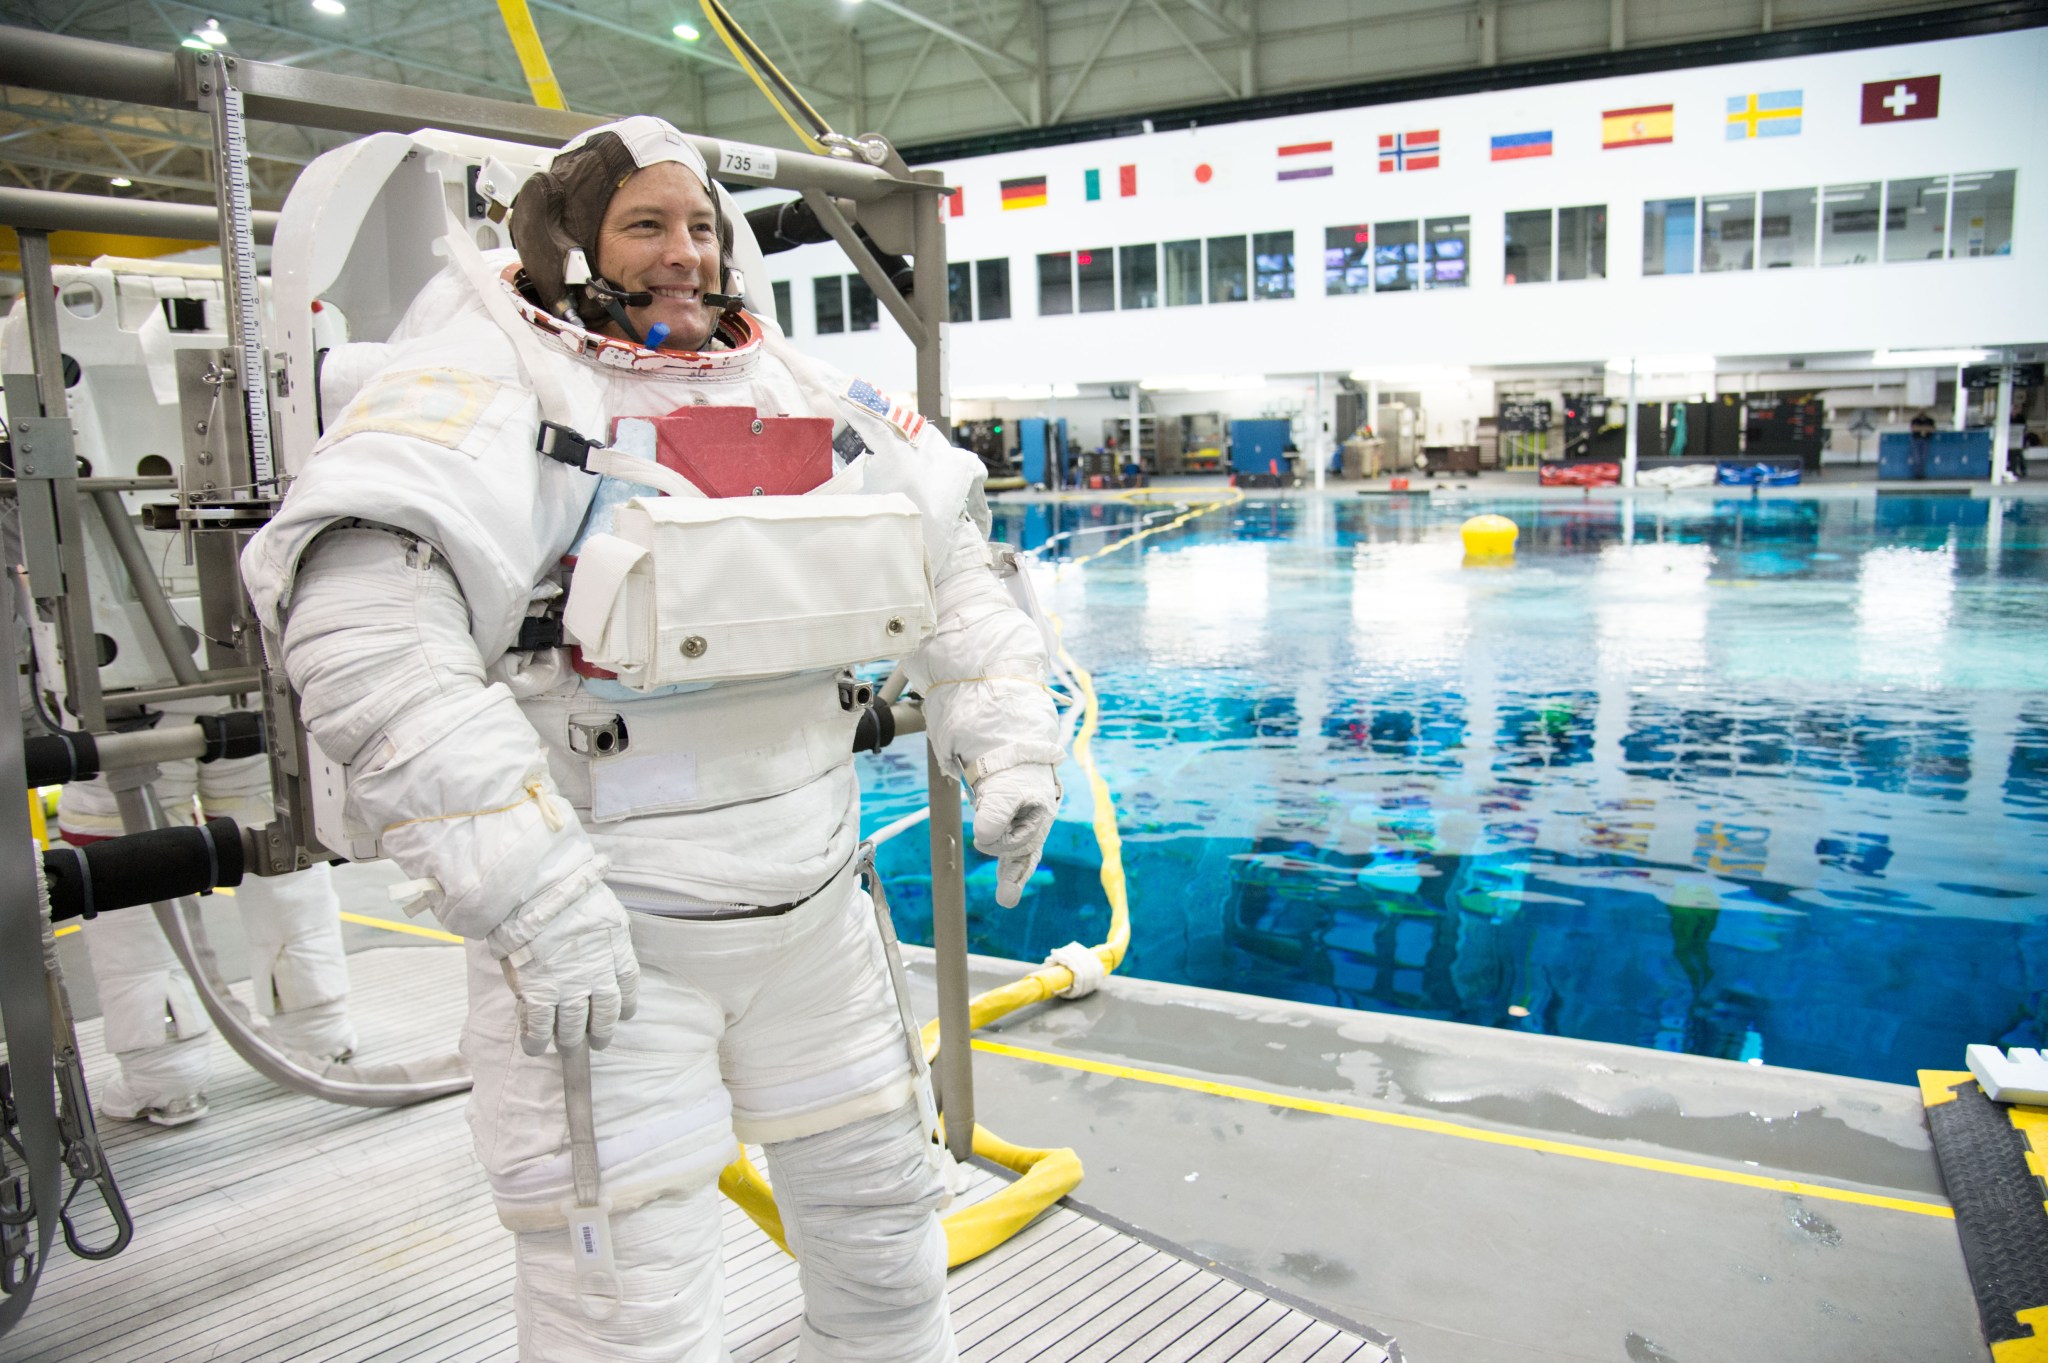 NASA astronaut Scott Tingle completes spacewalk training in the Neutral Buoyancy Laboratory at NASA’s Johnson Space Center